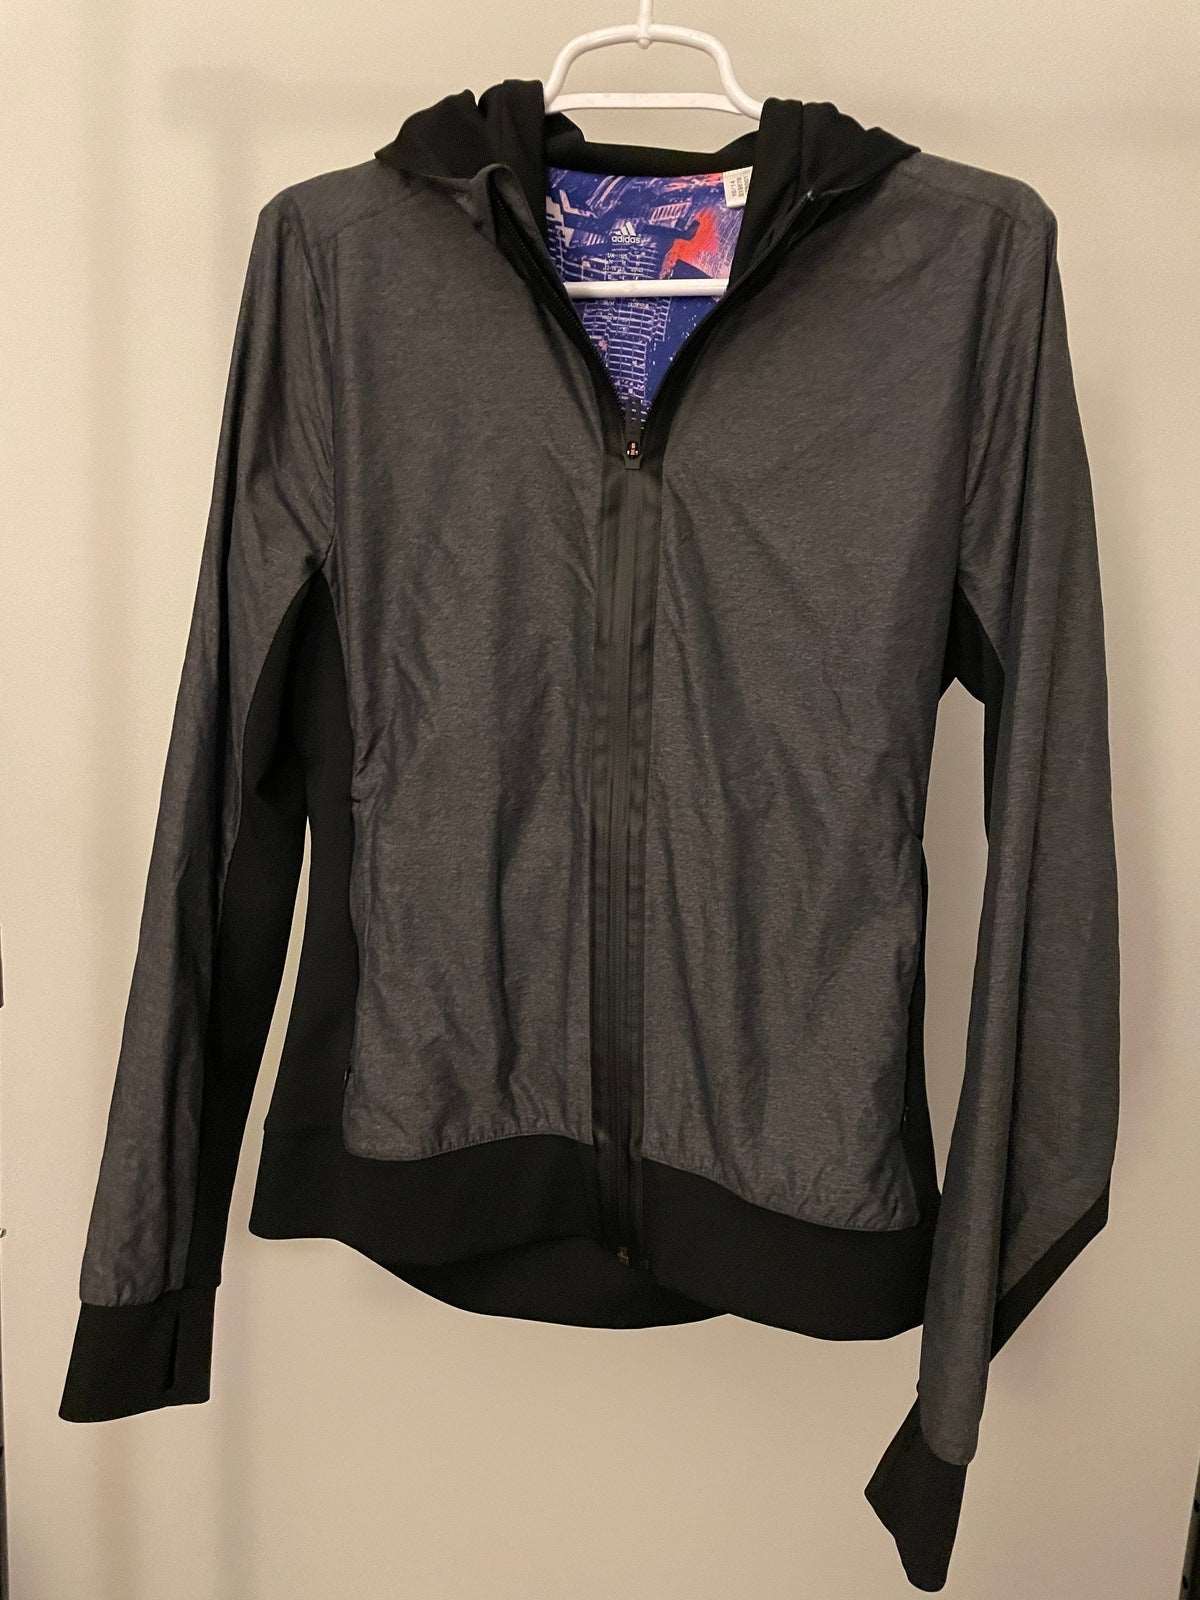 ThriftedEquestrian Clothing Medium Adidas Zip Up Jacket - Medium